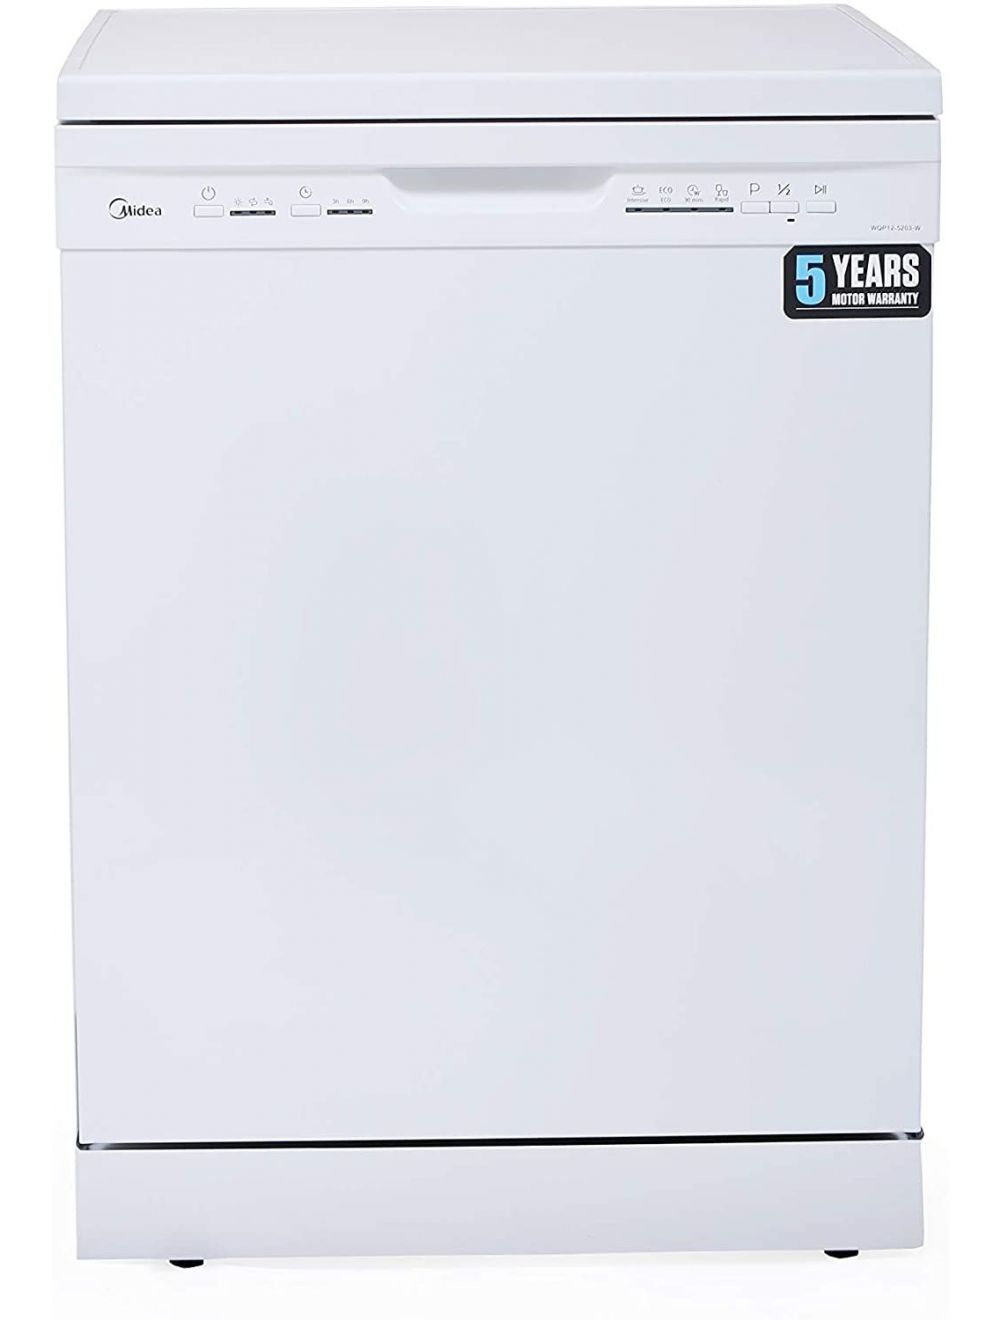 Midea 6 Programs, 12 Place Settings Free Standing Dishwasher, White-WQP12-5203-W